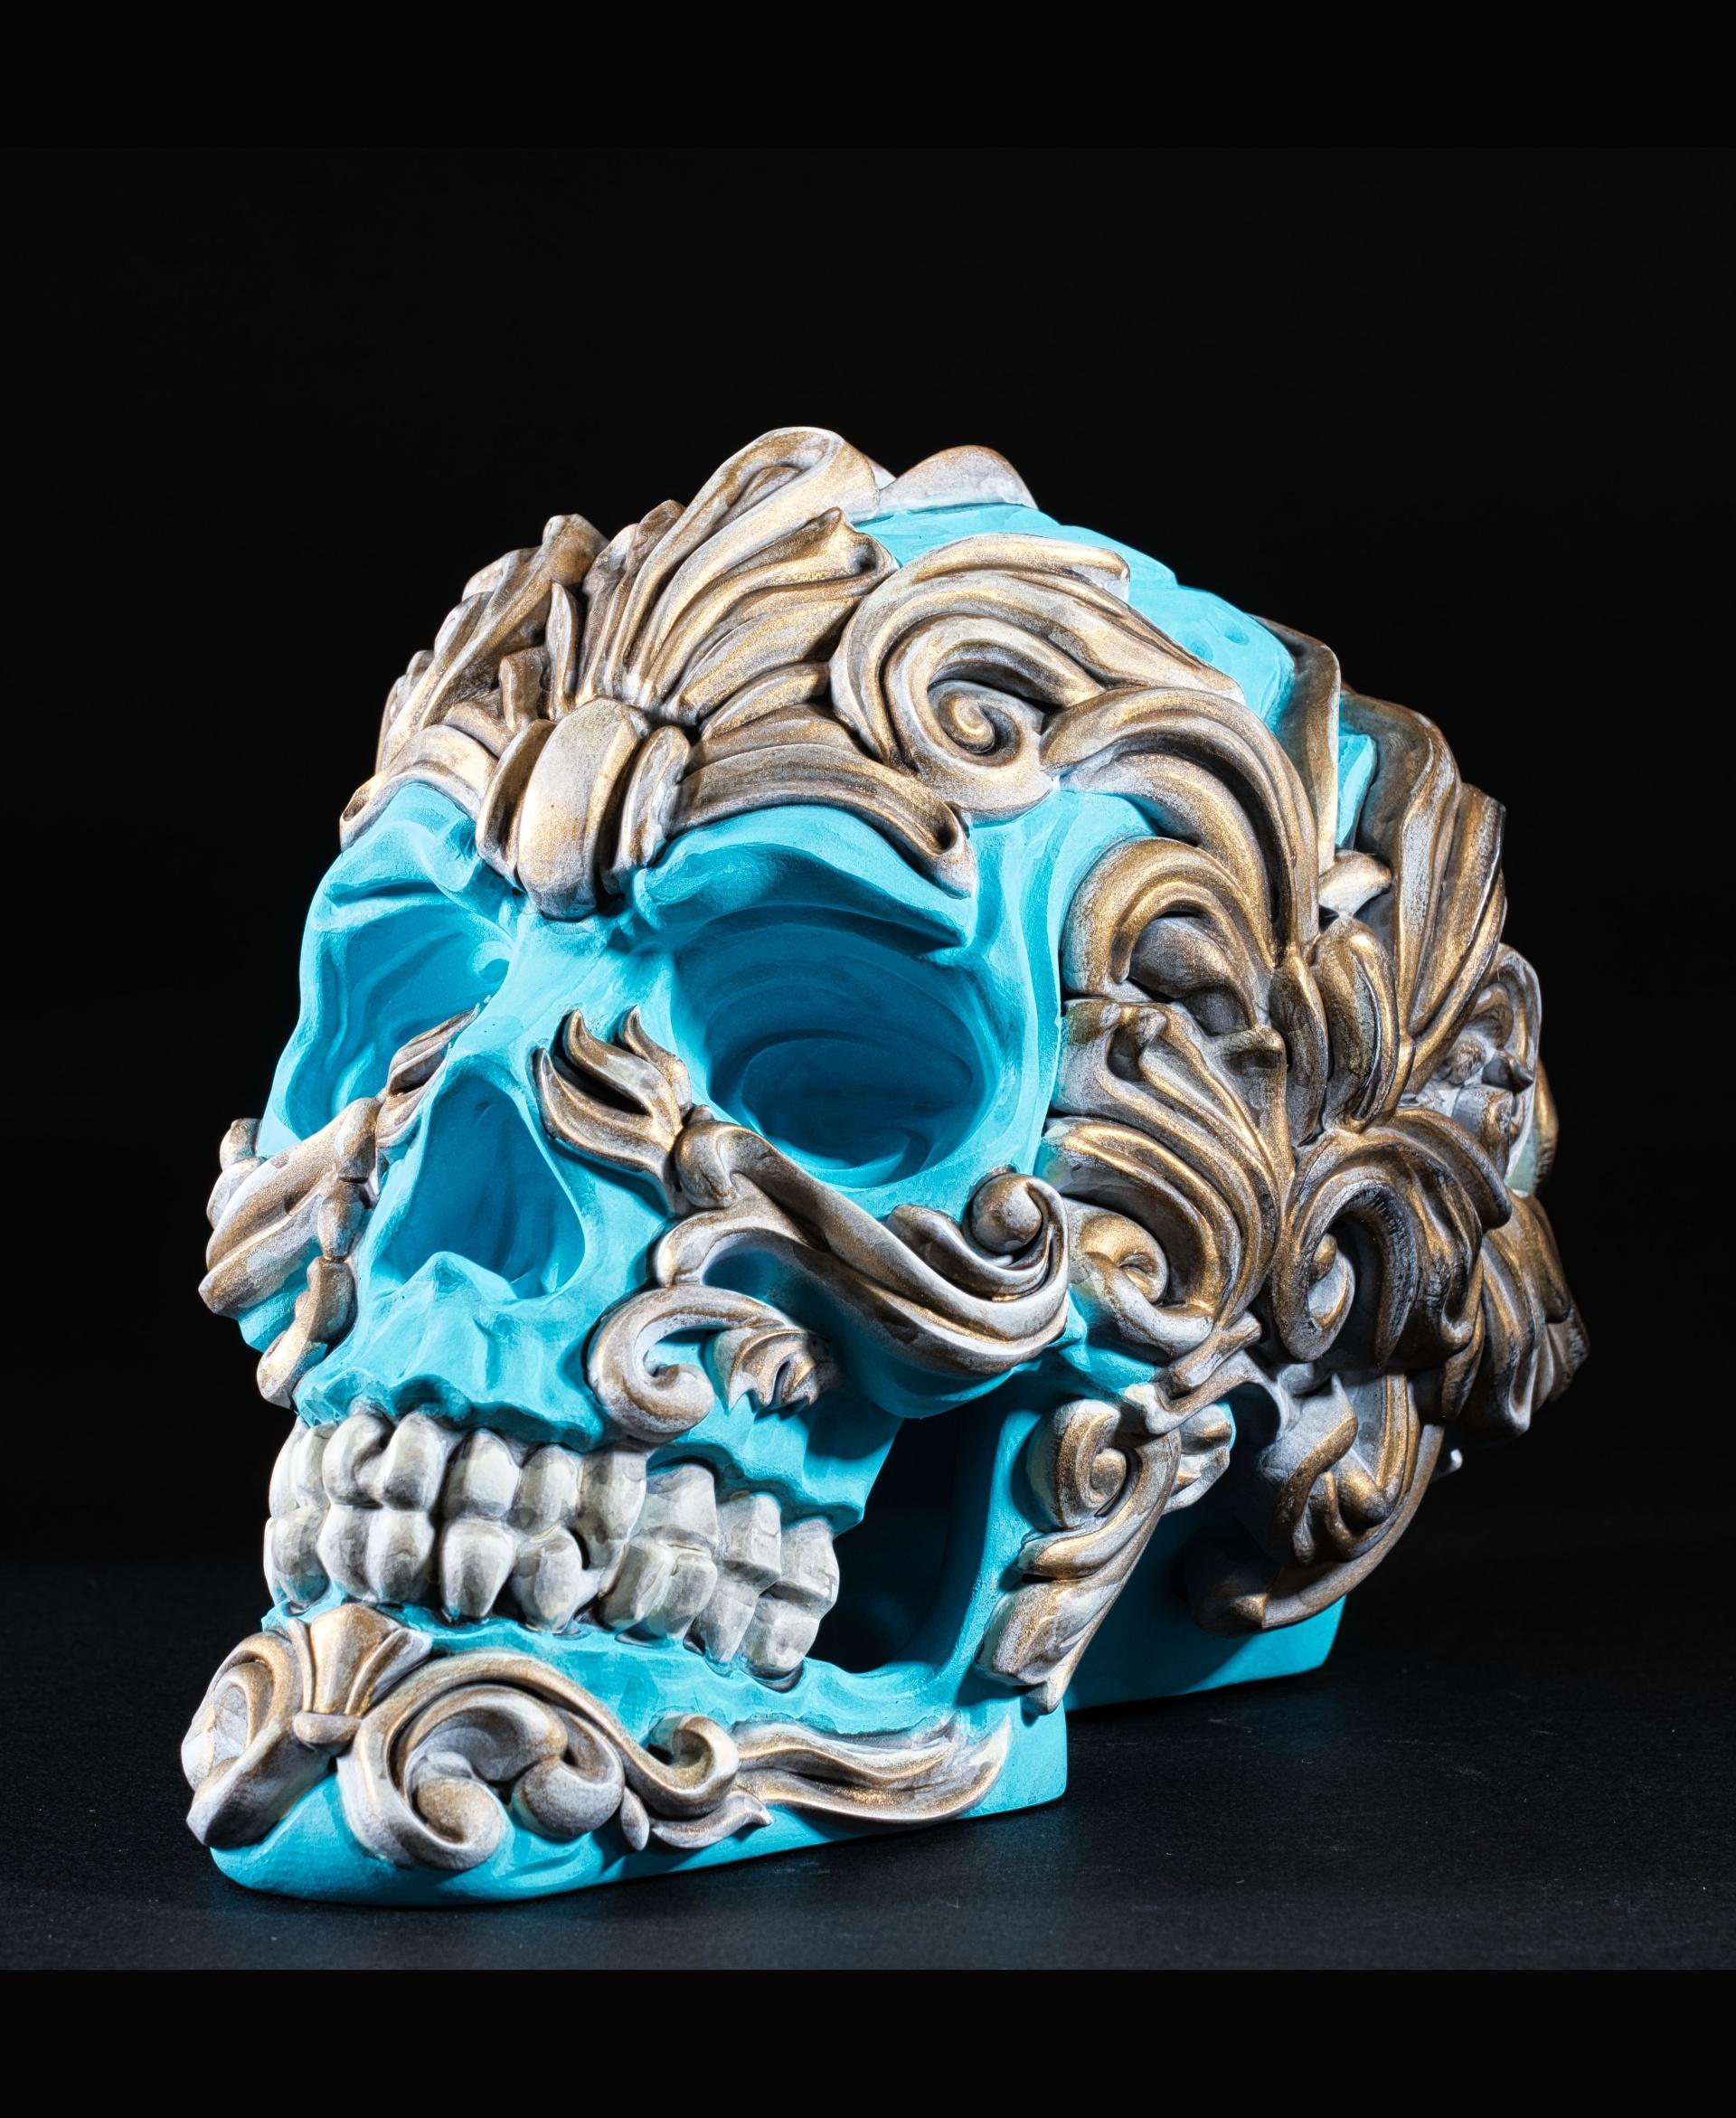 Ornate Skull - Rococo Scroll - Decoration - Printer: Elegoo Saturn 2
Resin: Siraya Tech Navy Grey
Paint: Monument Hobbies Pro Acryl - 3d model